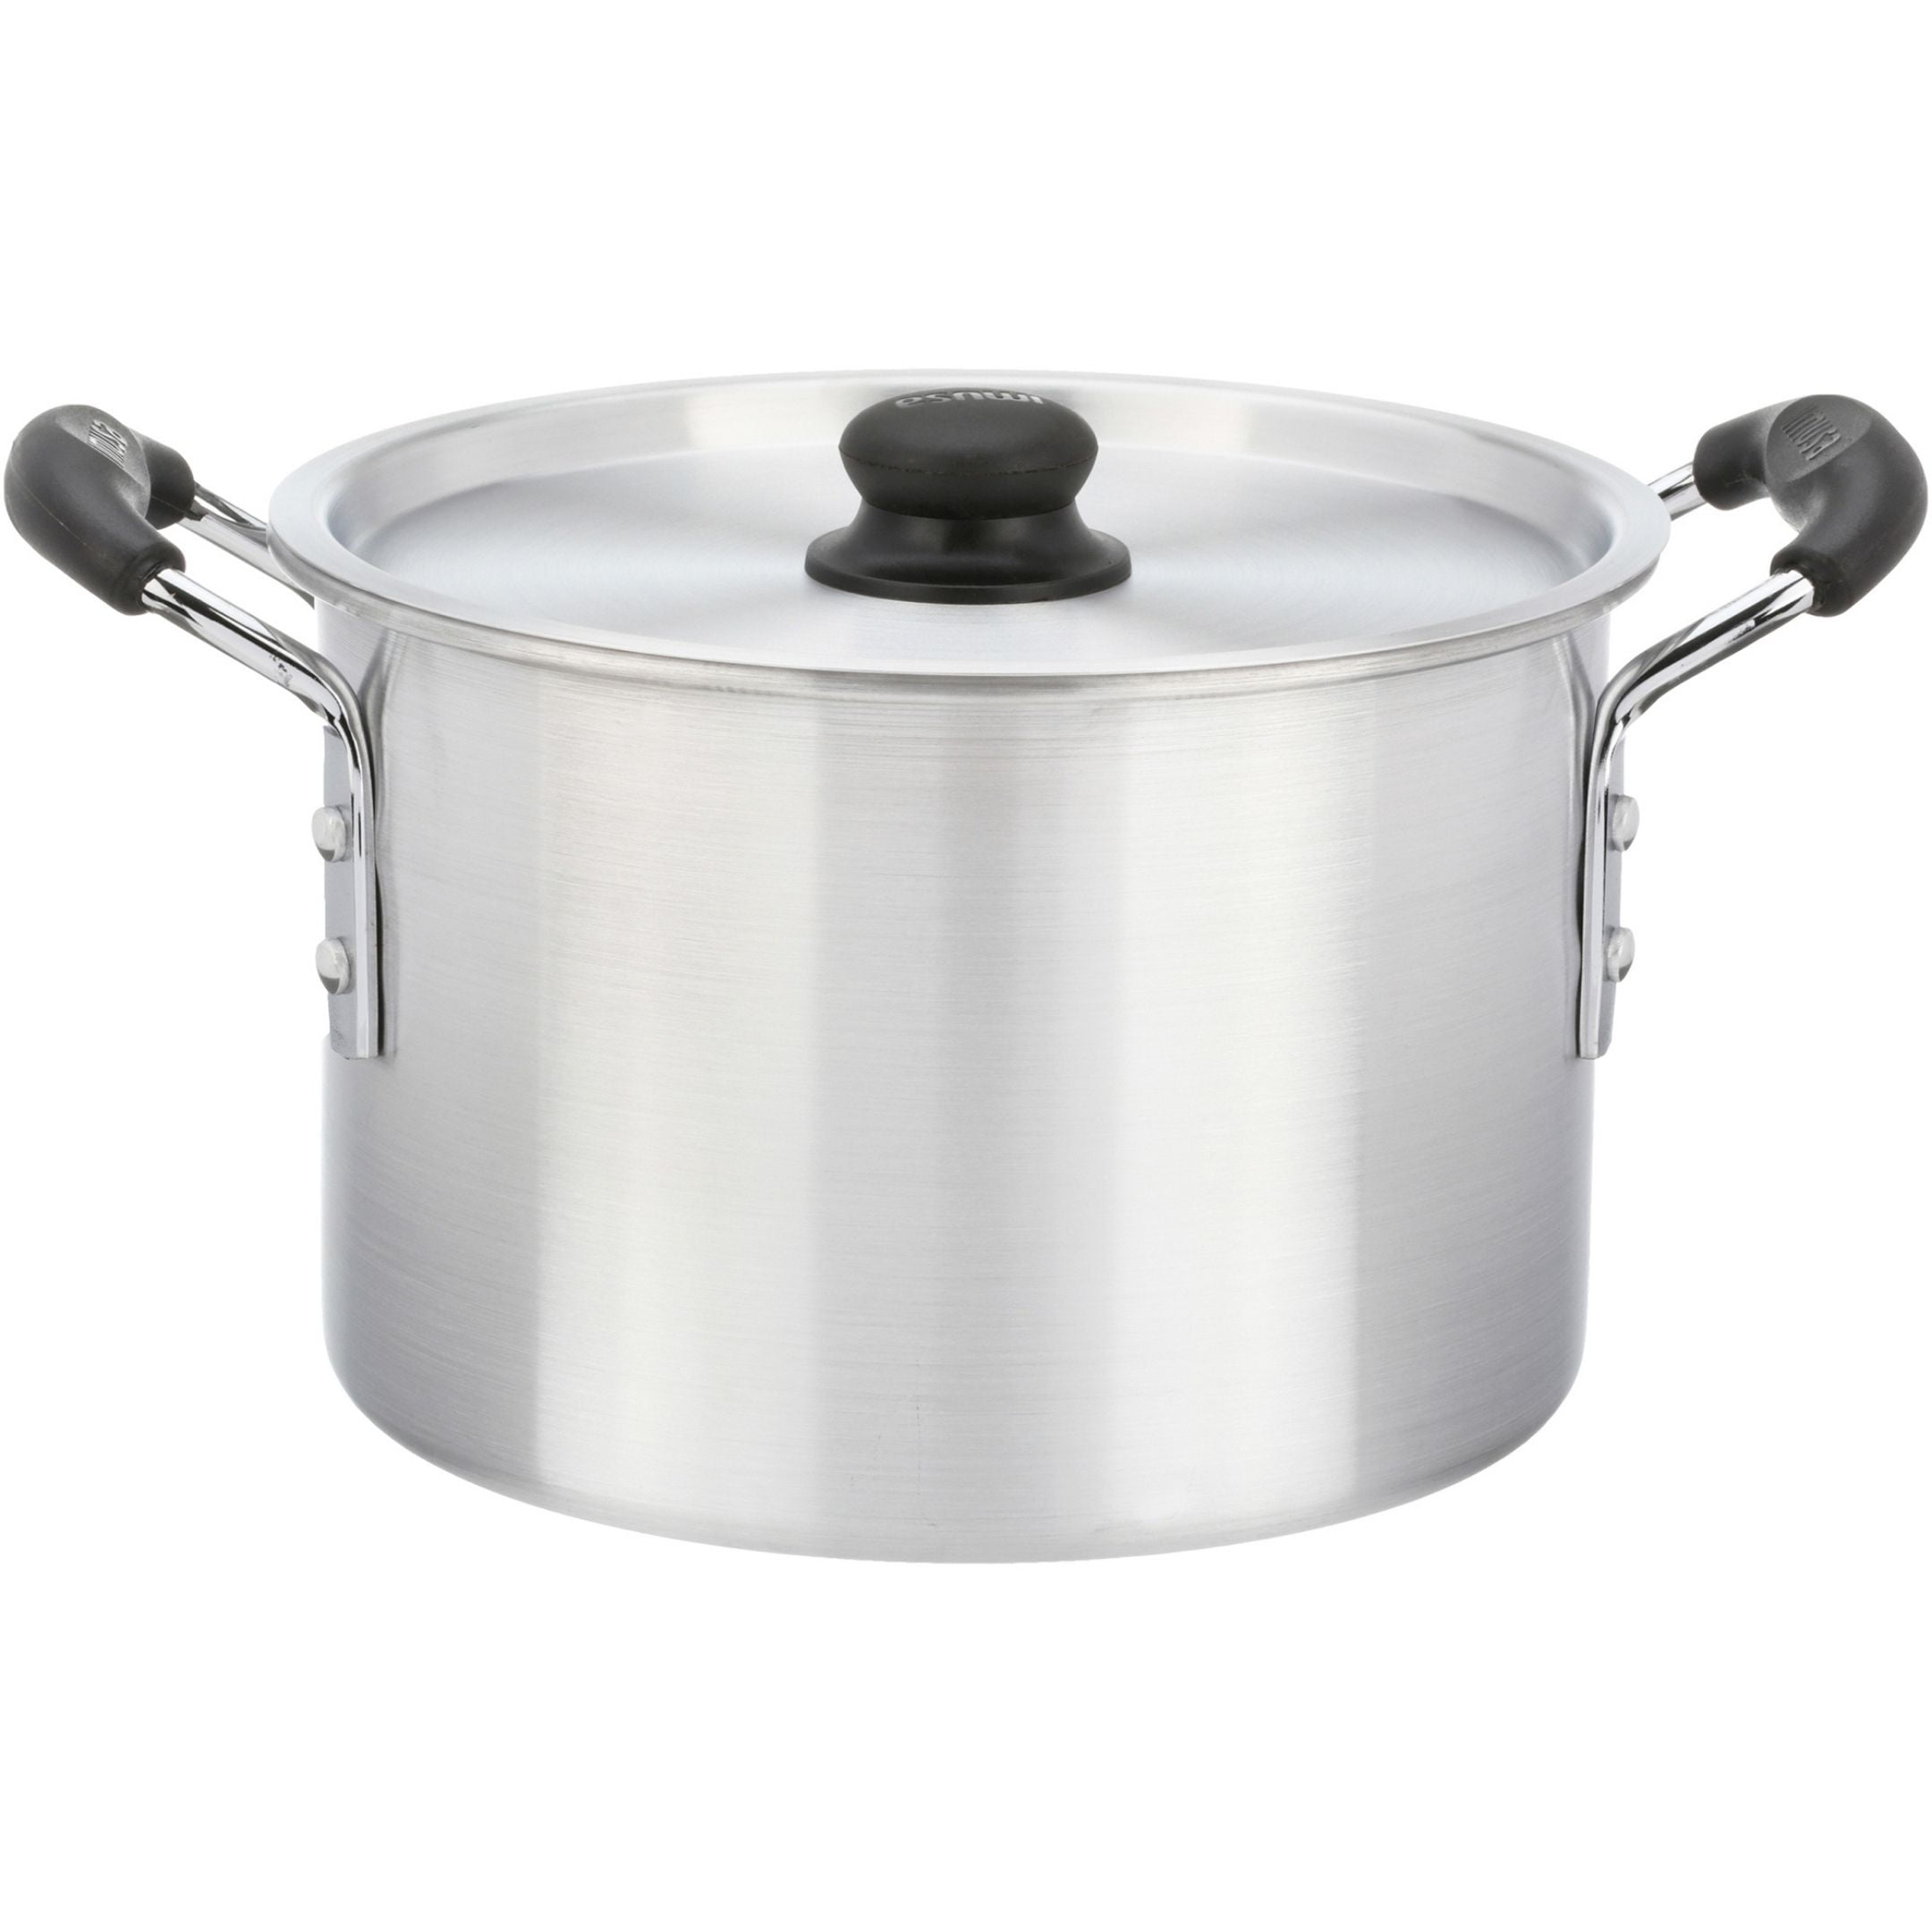 Aluminum Stock Pot, 20-Quart - Versatile and Durable Cookware for Large Batches